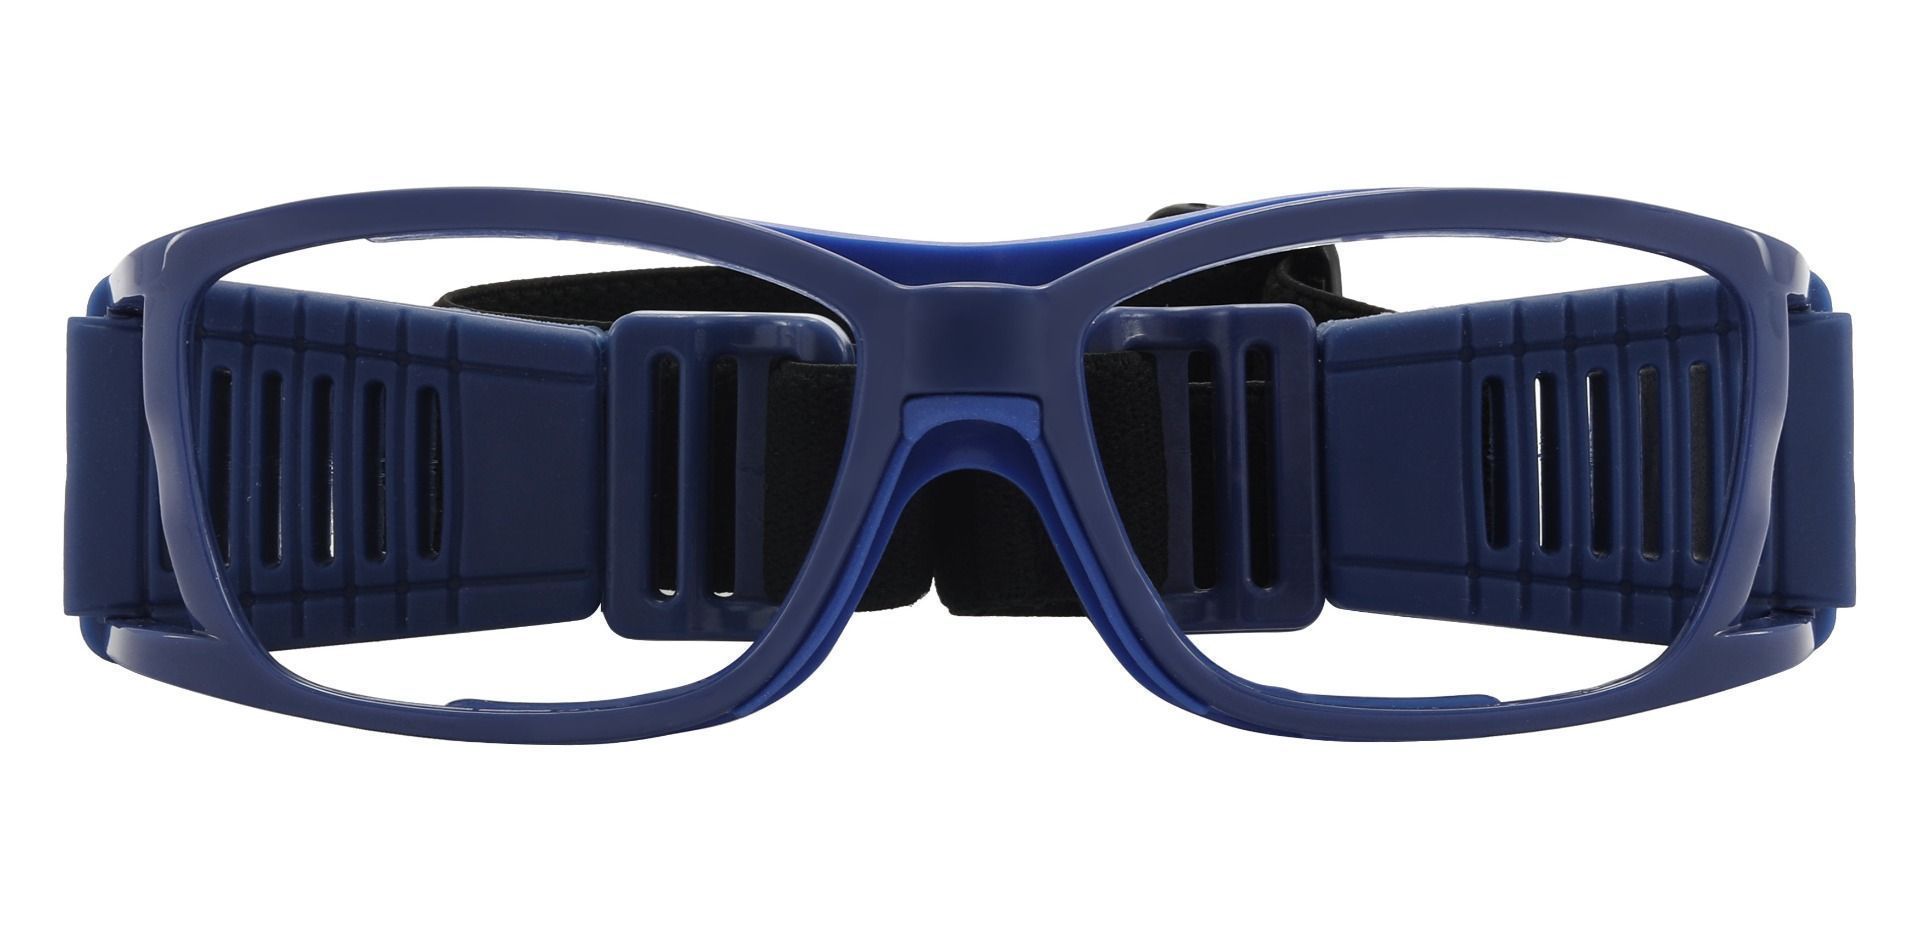 Jarrett Sports Goggles Prescription Glasses - Blue